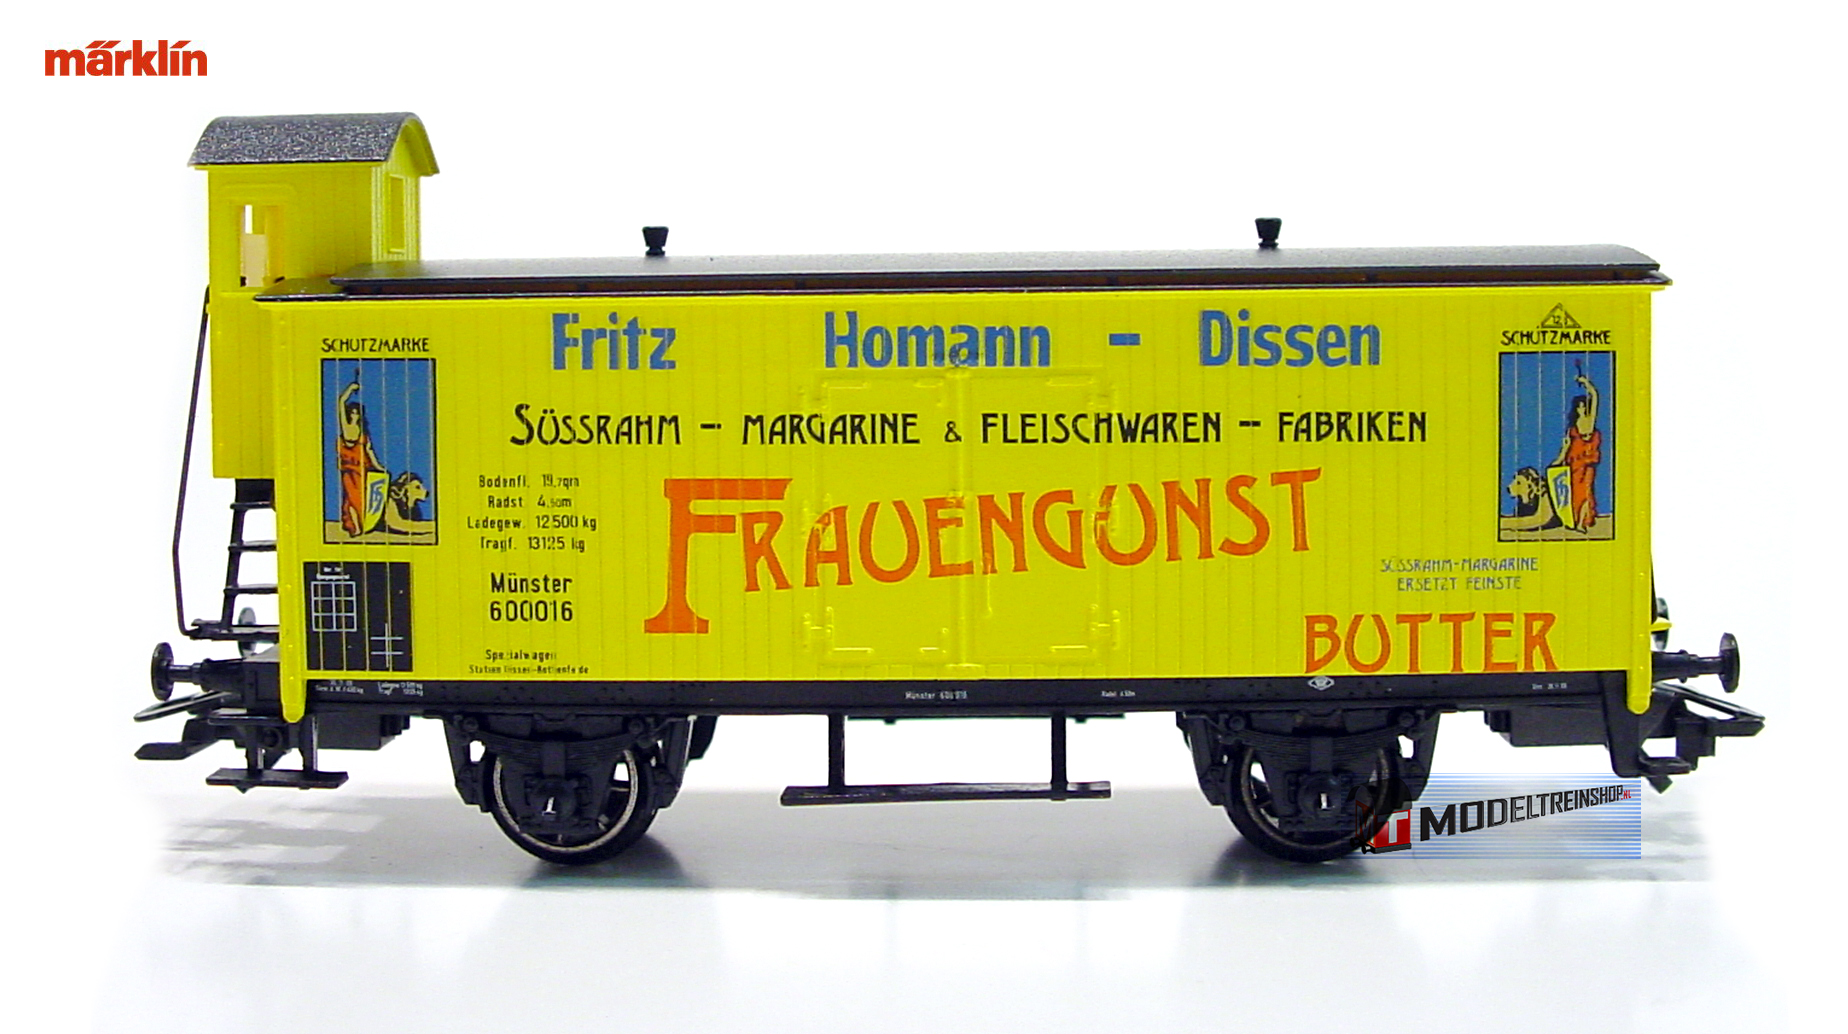 Marklin H0 4891 Wagen met Remhuisje FRAUENGUNST BUTTER" und "Fritz Homann - Dissen - Modeltreinshop